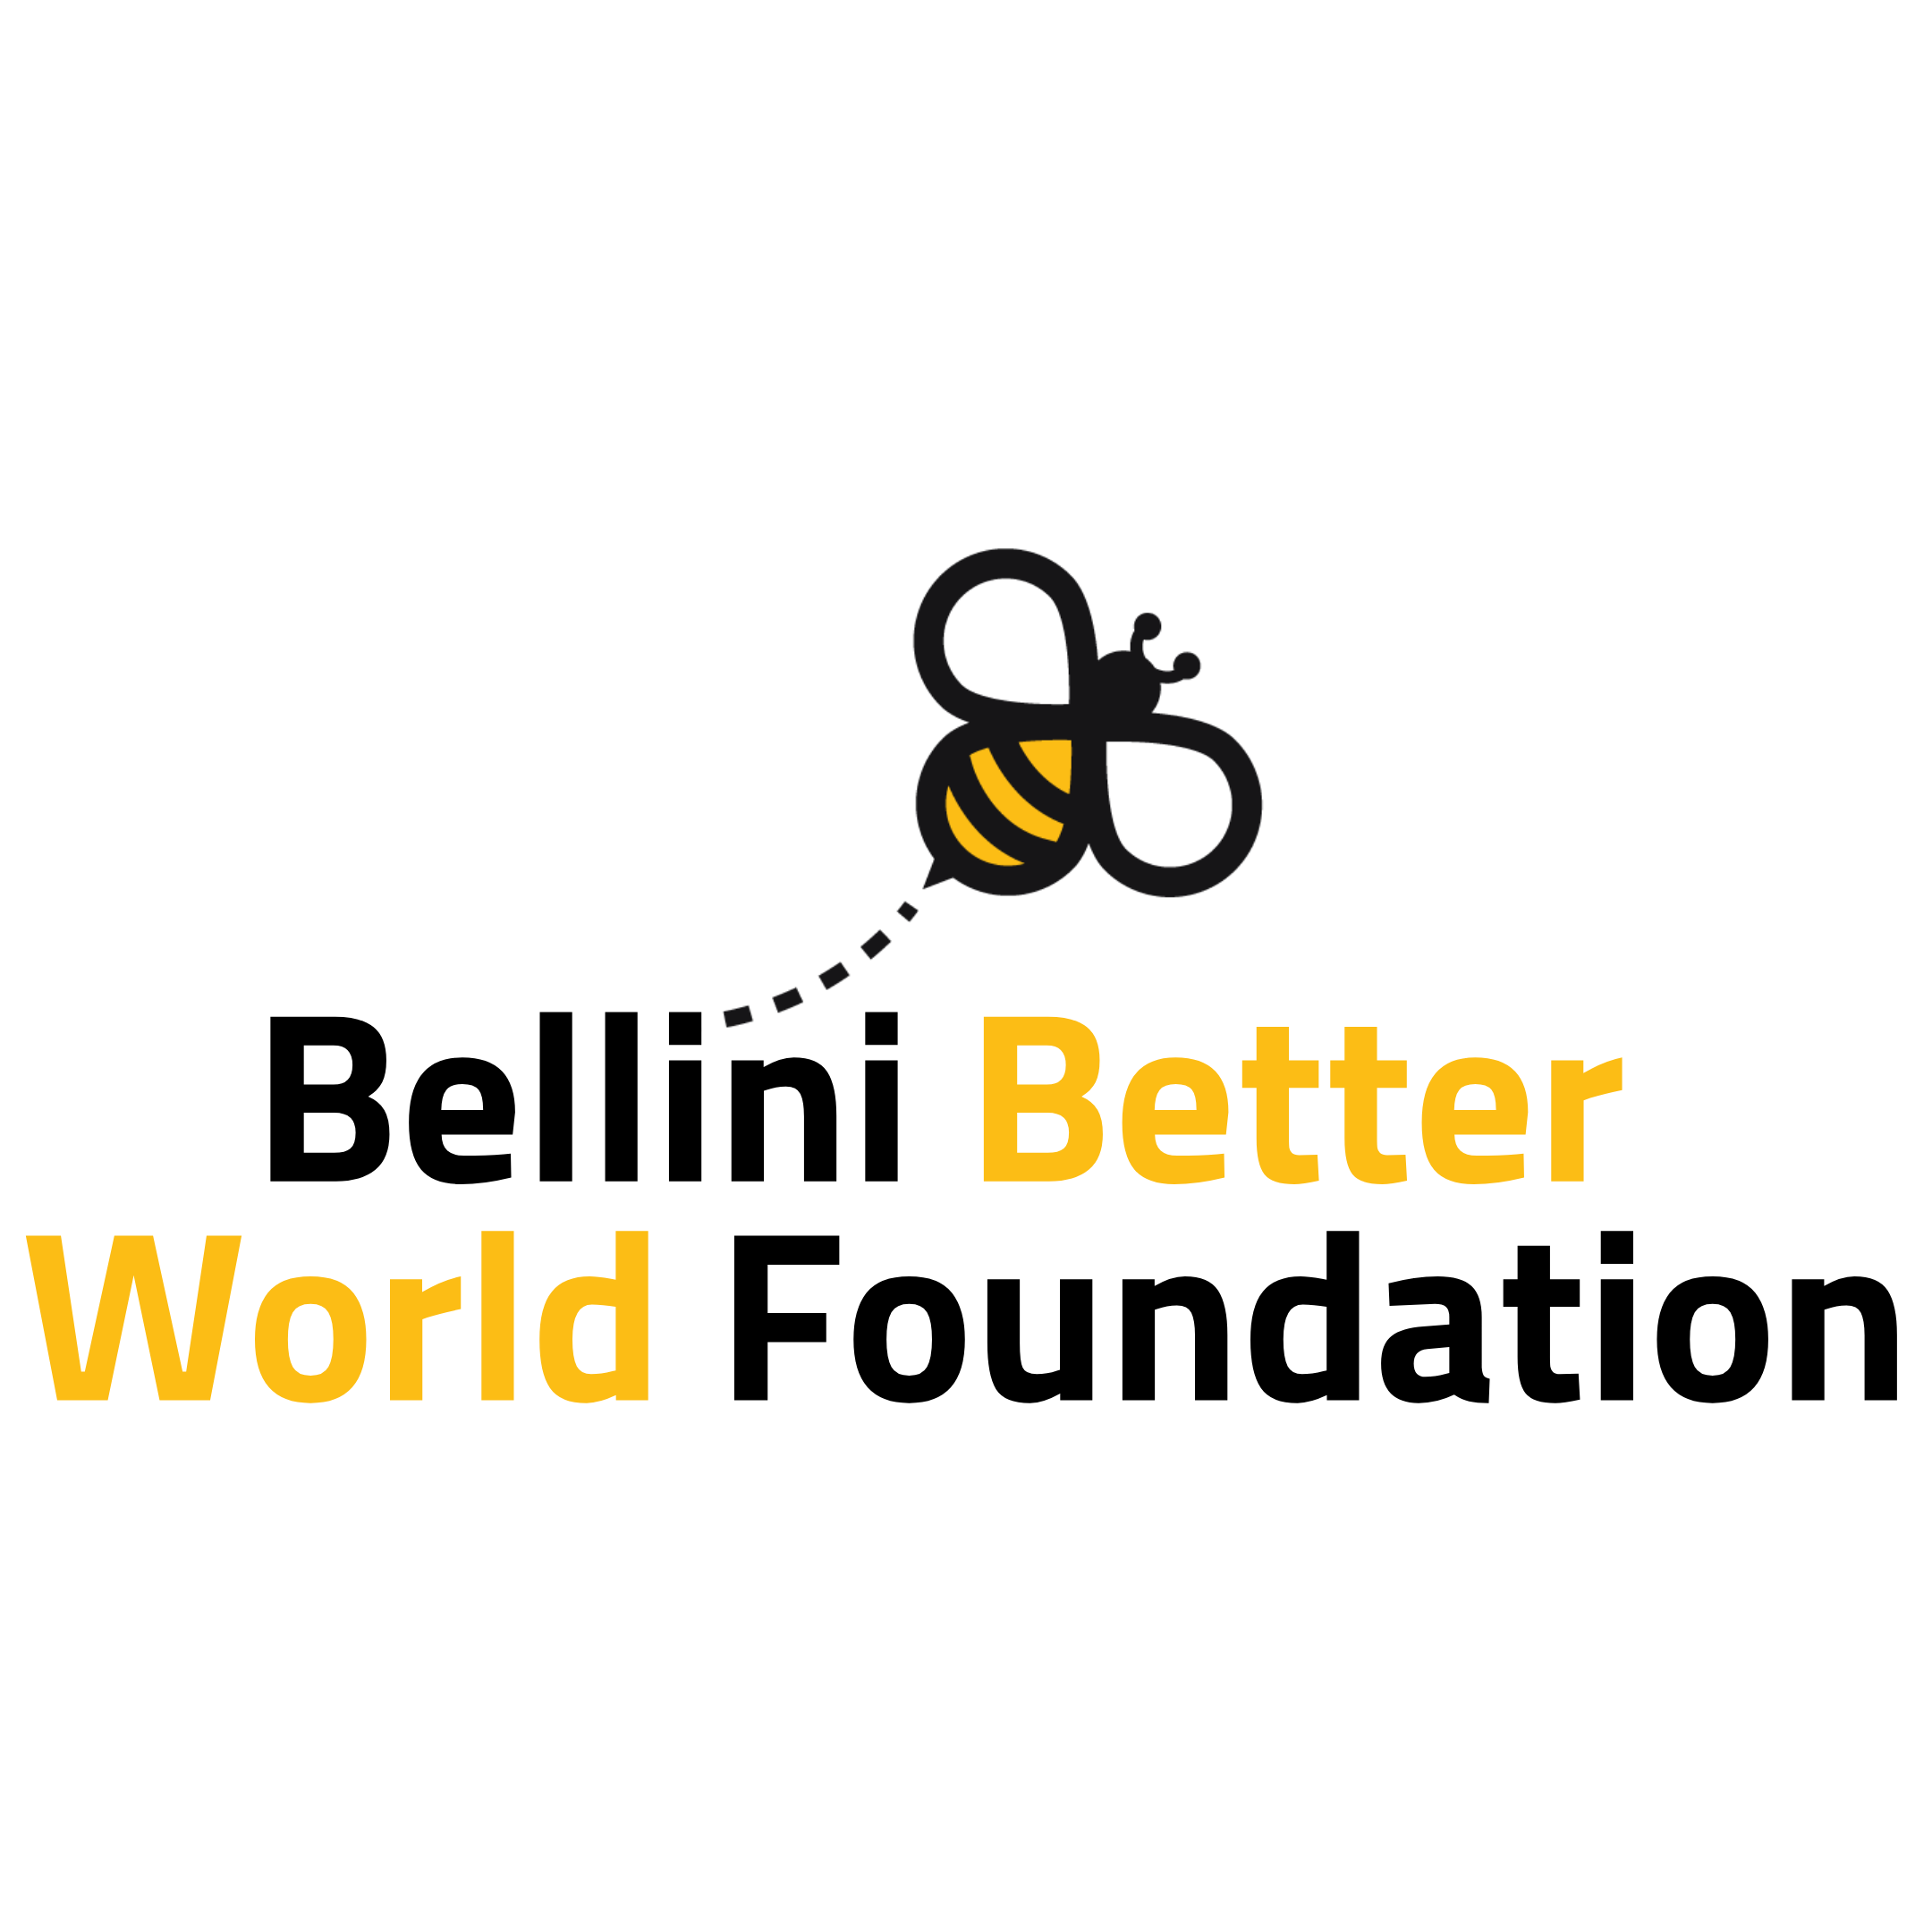 Bellini Better World Foundation